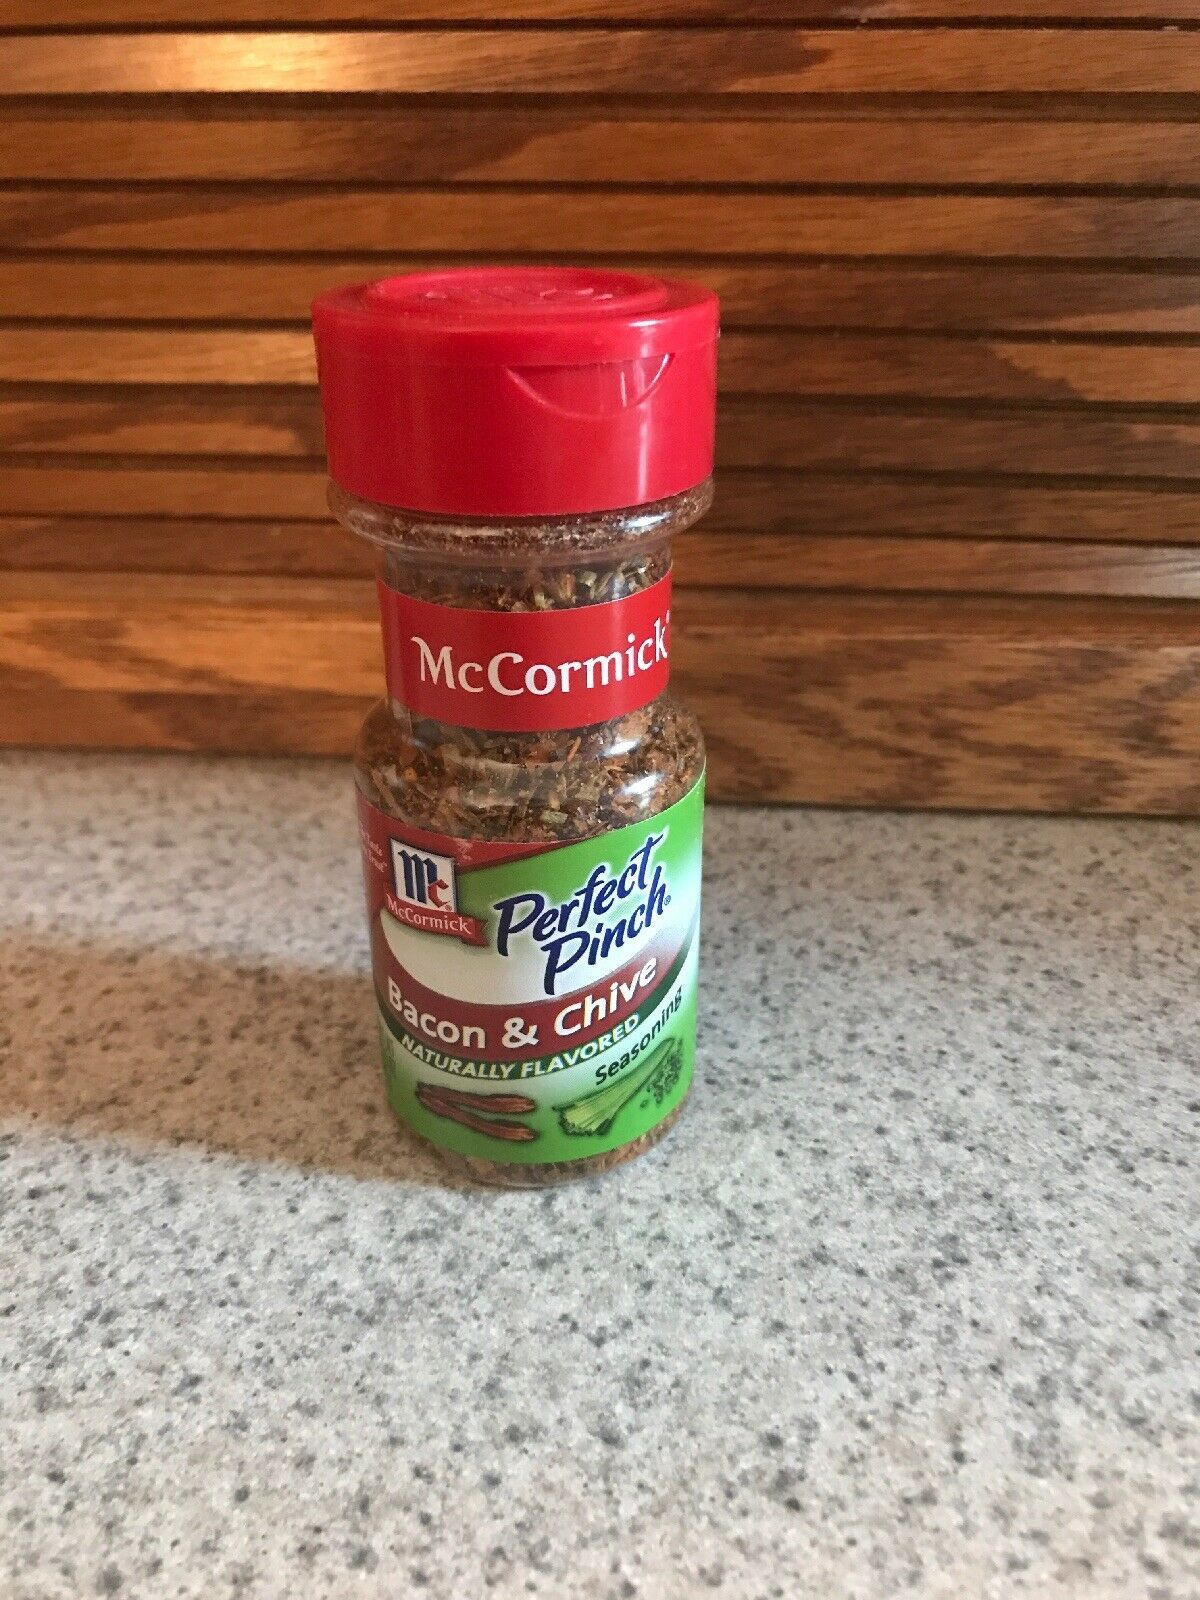 McCormick Perfect Pinch Garlic Pepper Salt Free Seasoning, 2.5 oz